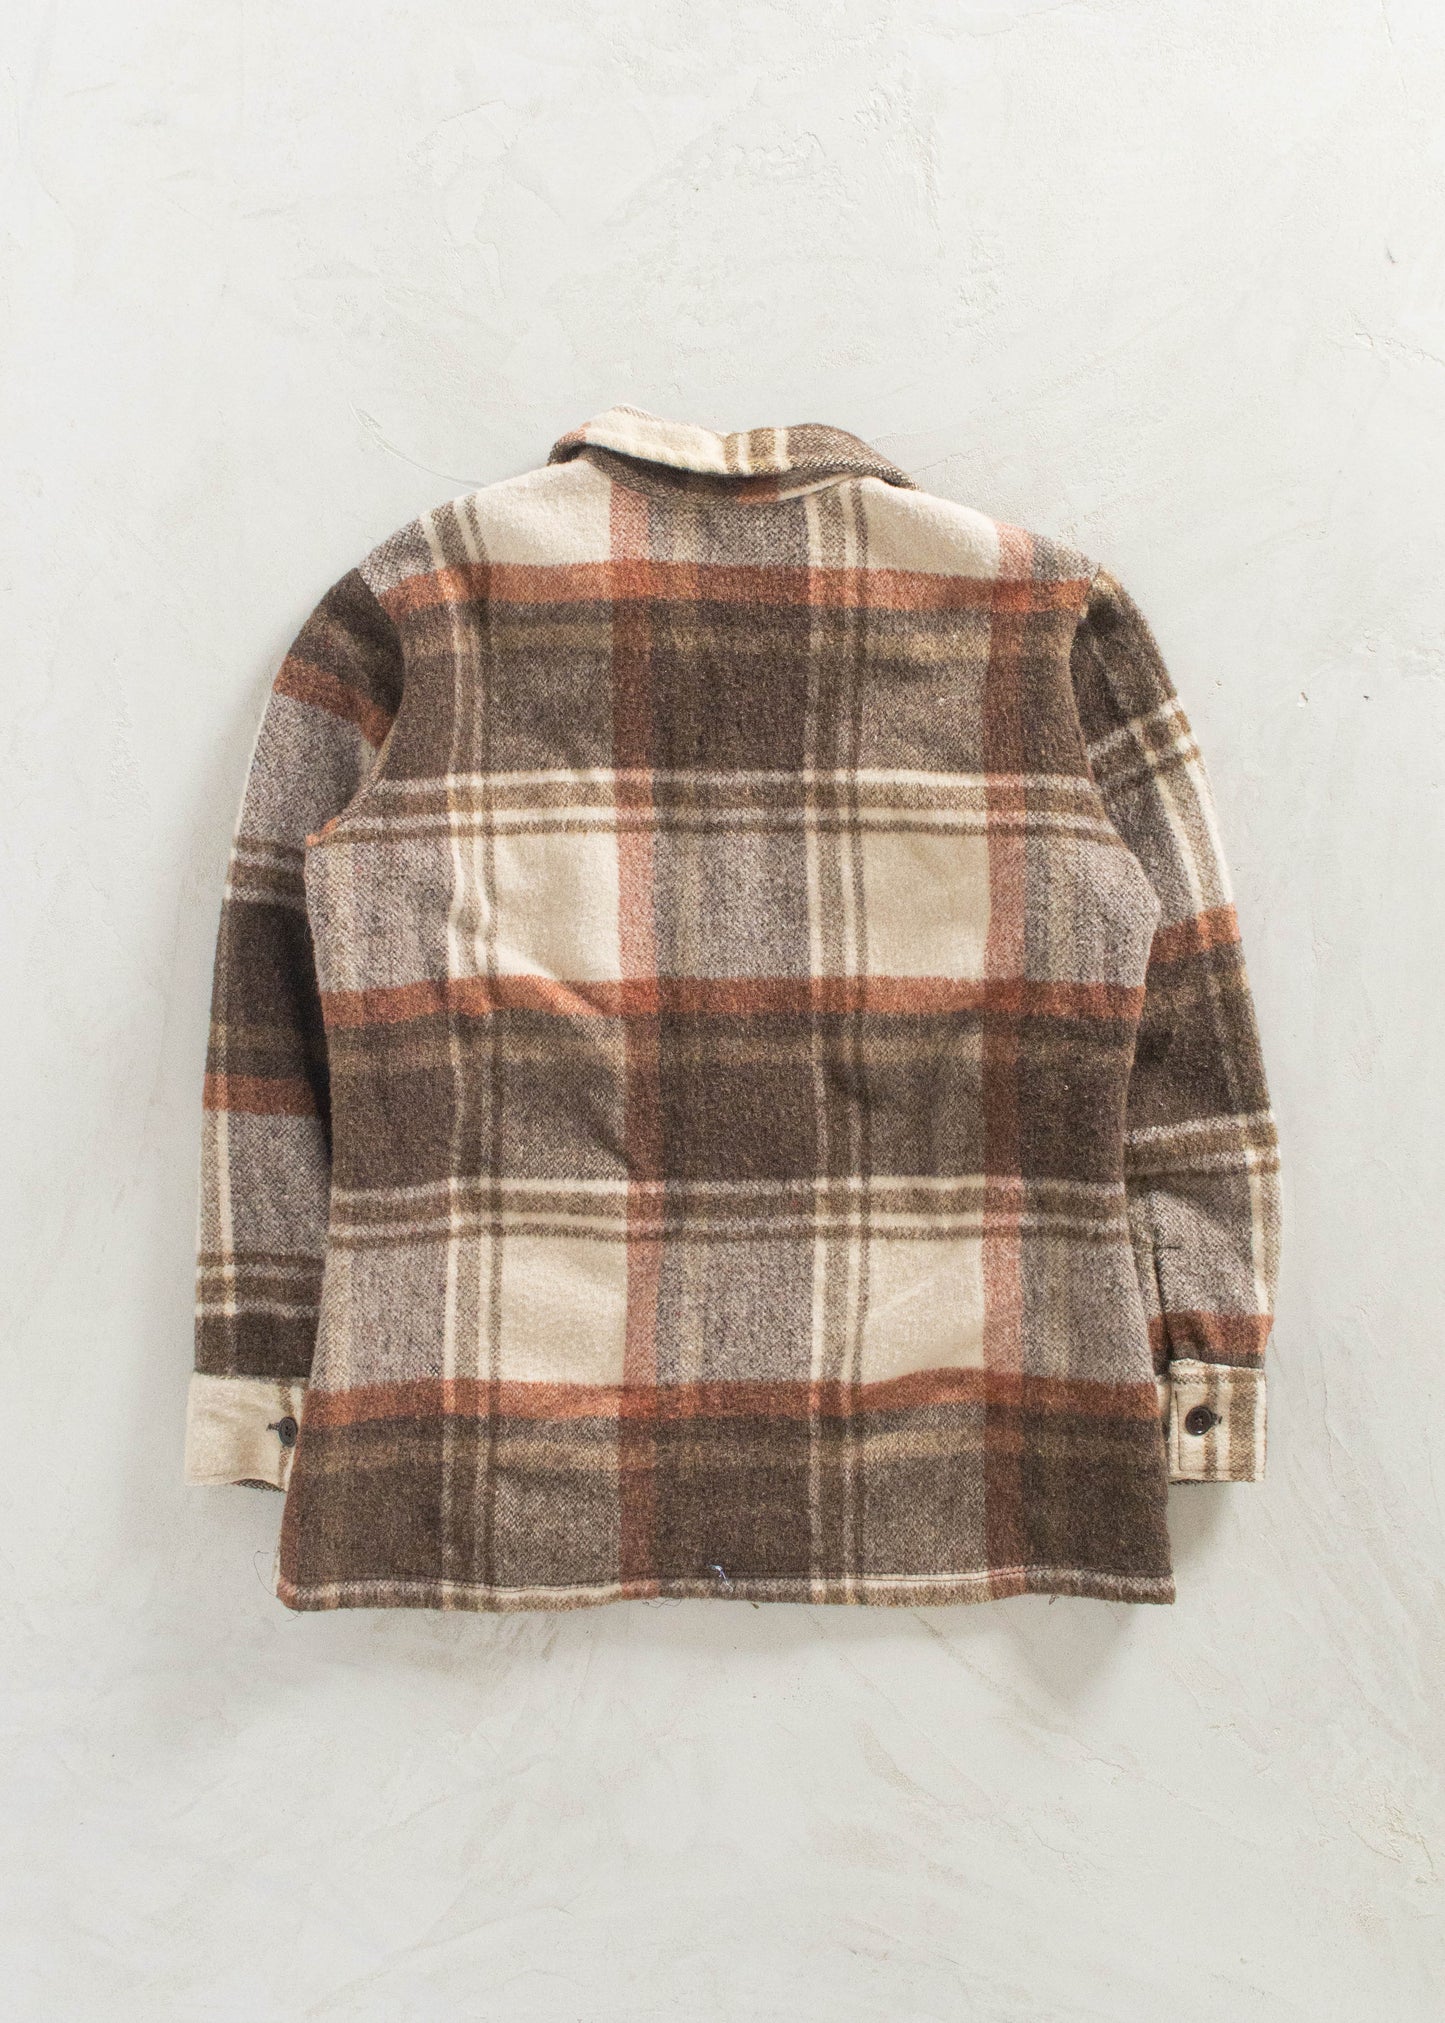 Vintage Wool Flannel Button Up Shirt Size L/XL